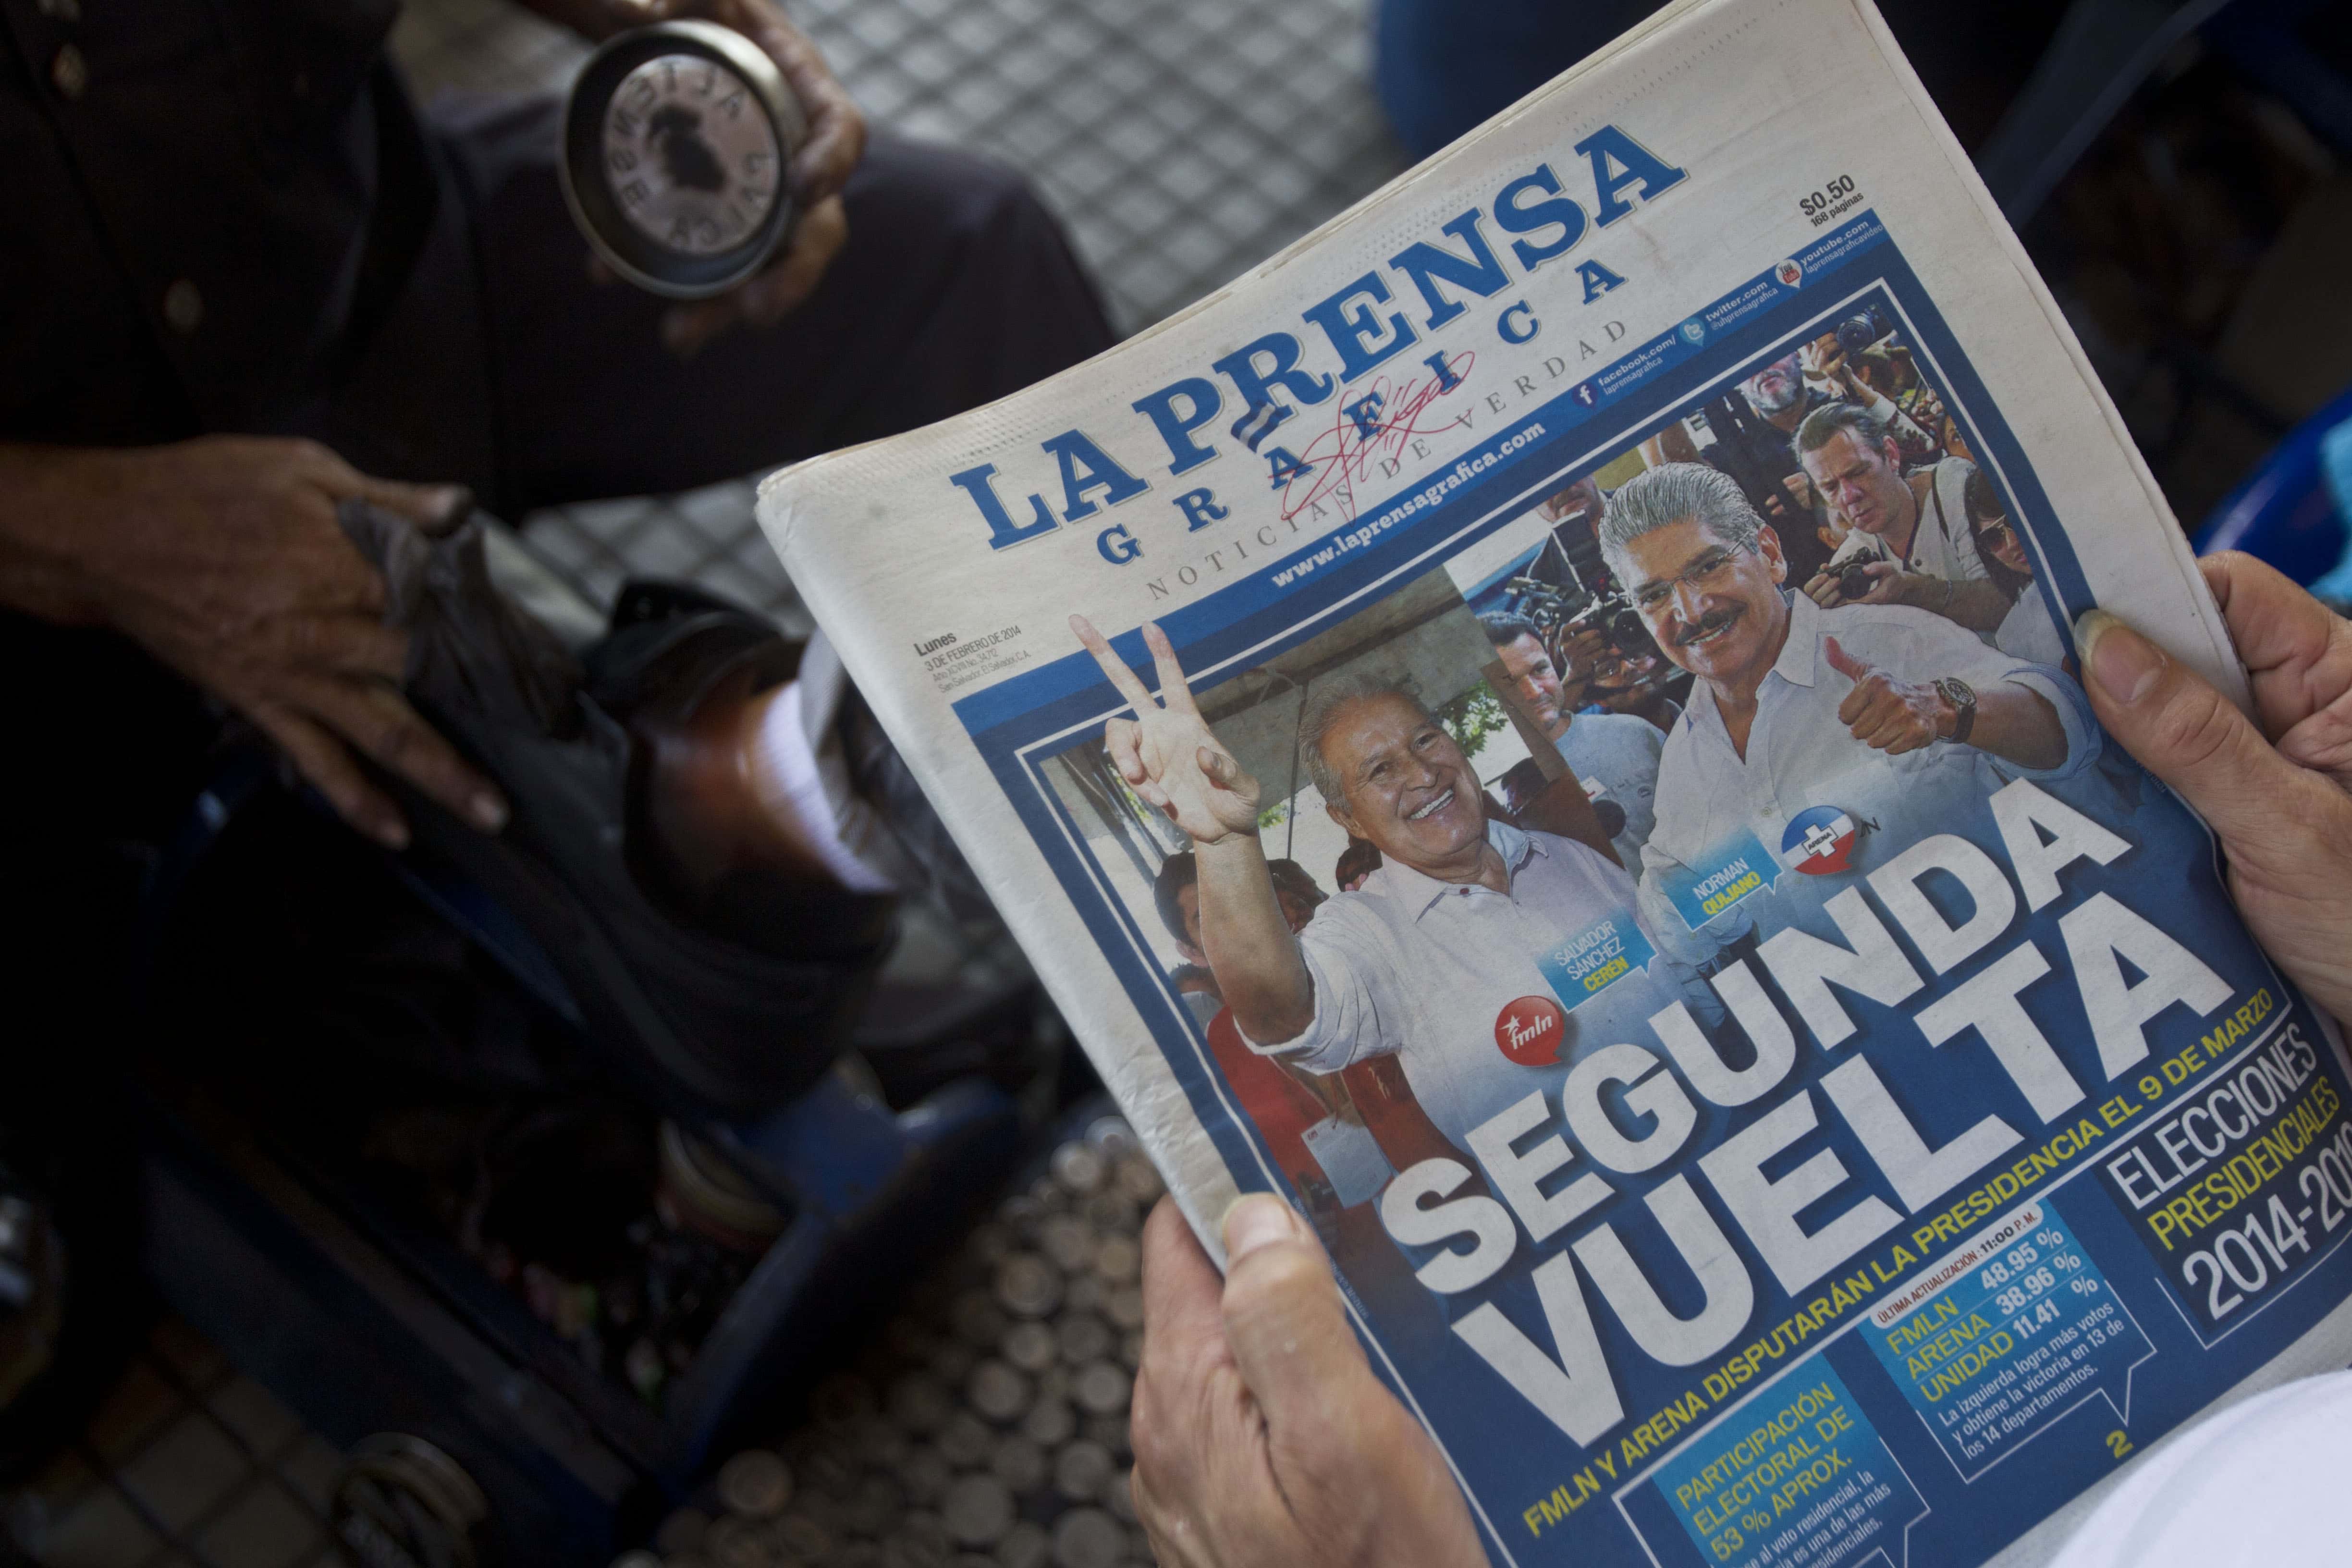 A man reads a copy of "La Prensa Gráfica" while having his shoes shined in San Salvador, El Salvador, 3 February 2014, AP Photo/Esteban Felix